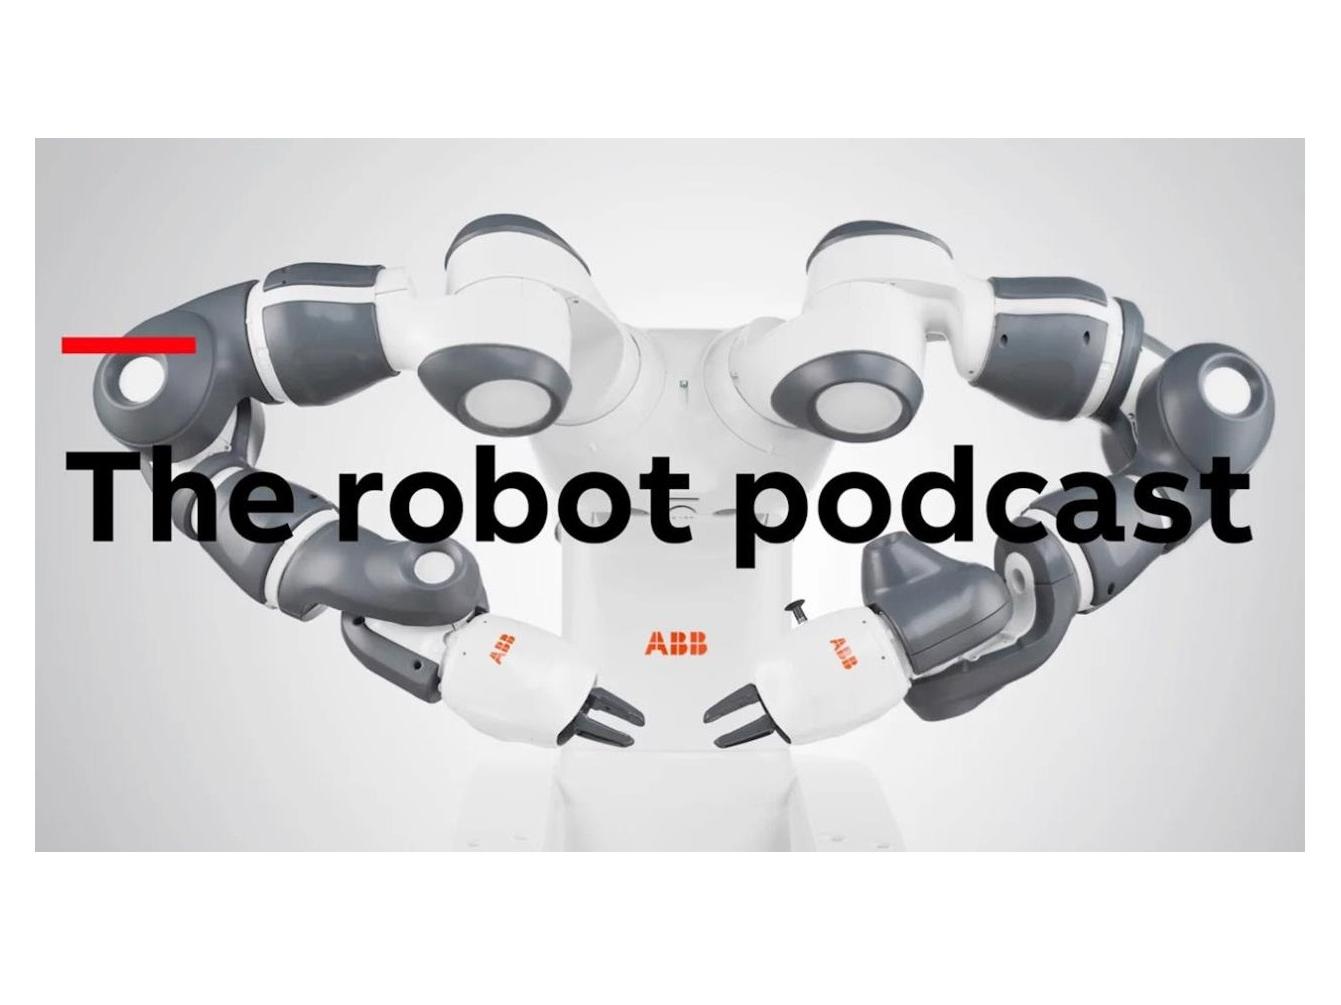 ABB’s Robot Podcast in triumphant return series